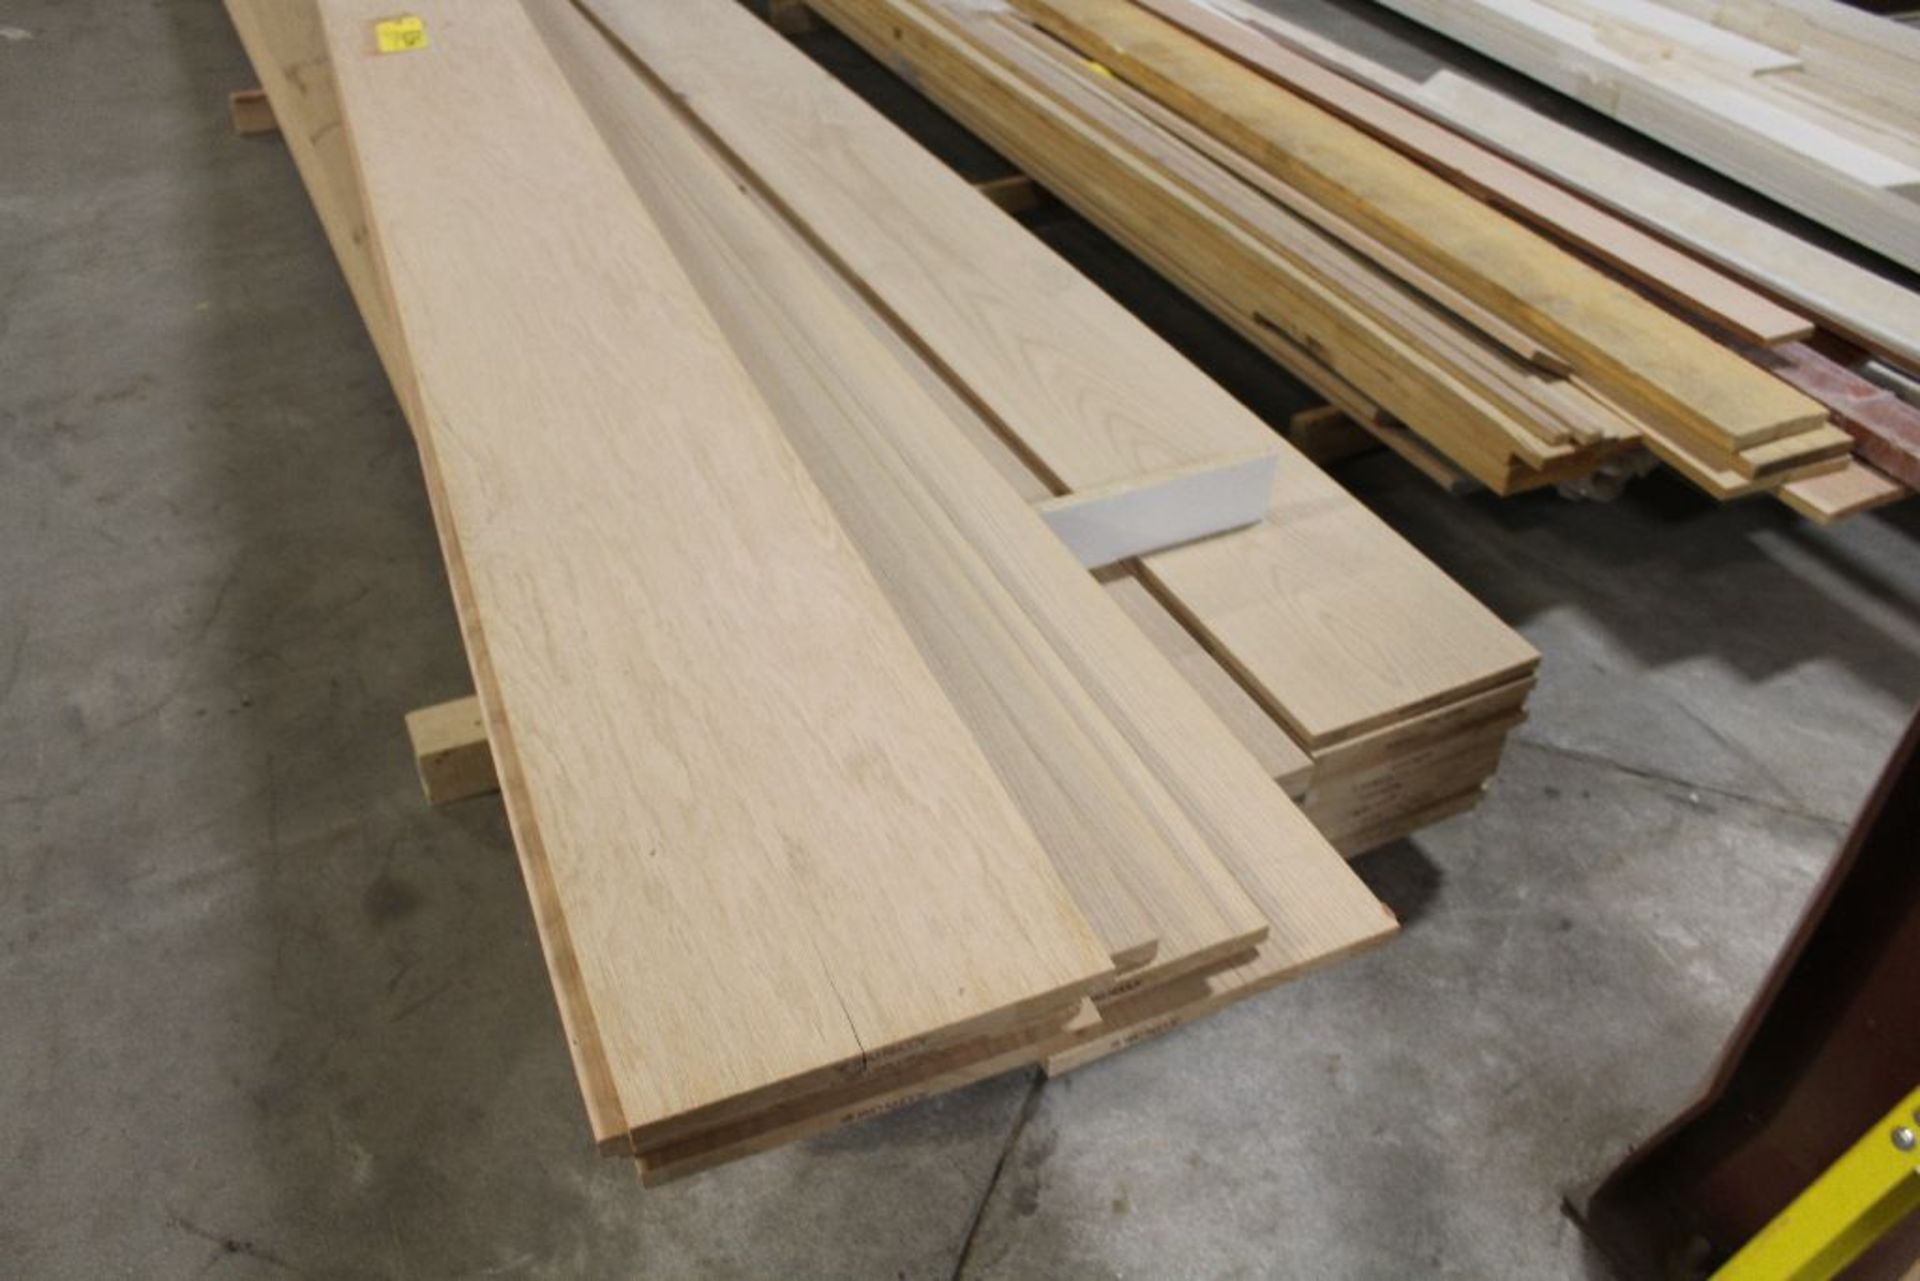 Lumber oak plank, 3/4" x 12" x 16'. - Image 3 of 4